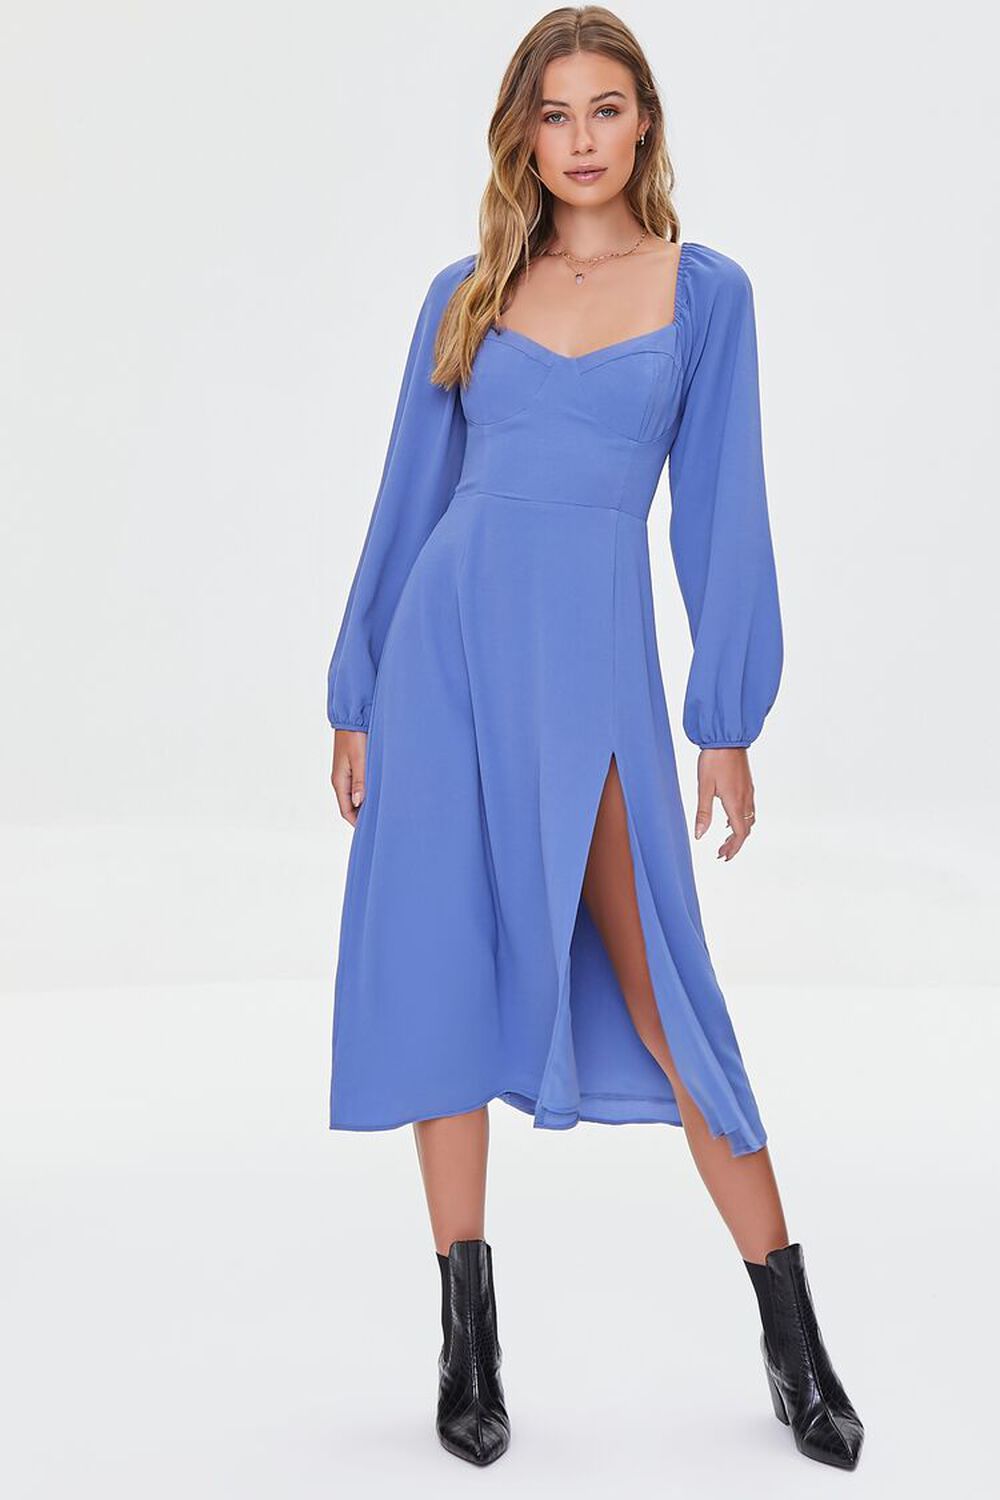 BLUE Sweetheart Peasant-Sleeve Dress, image 1